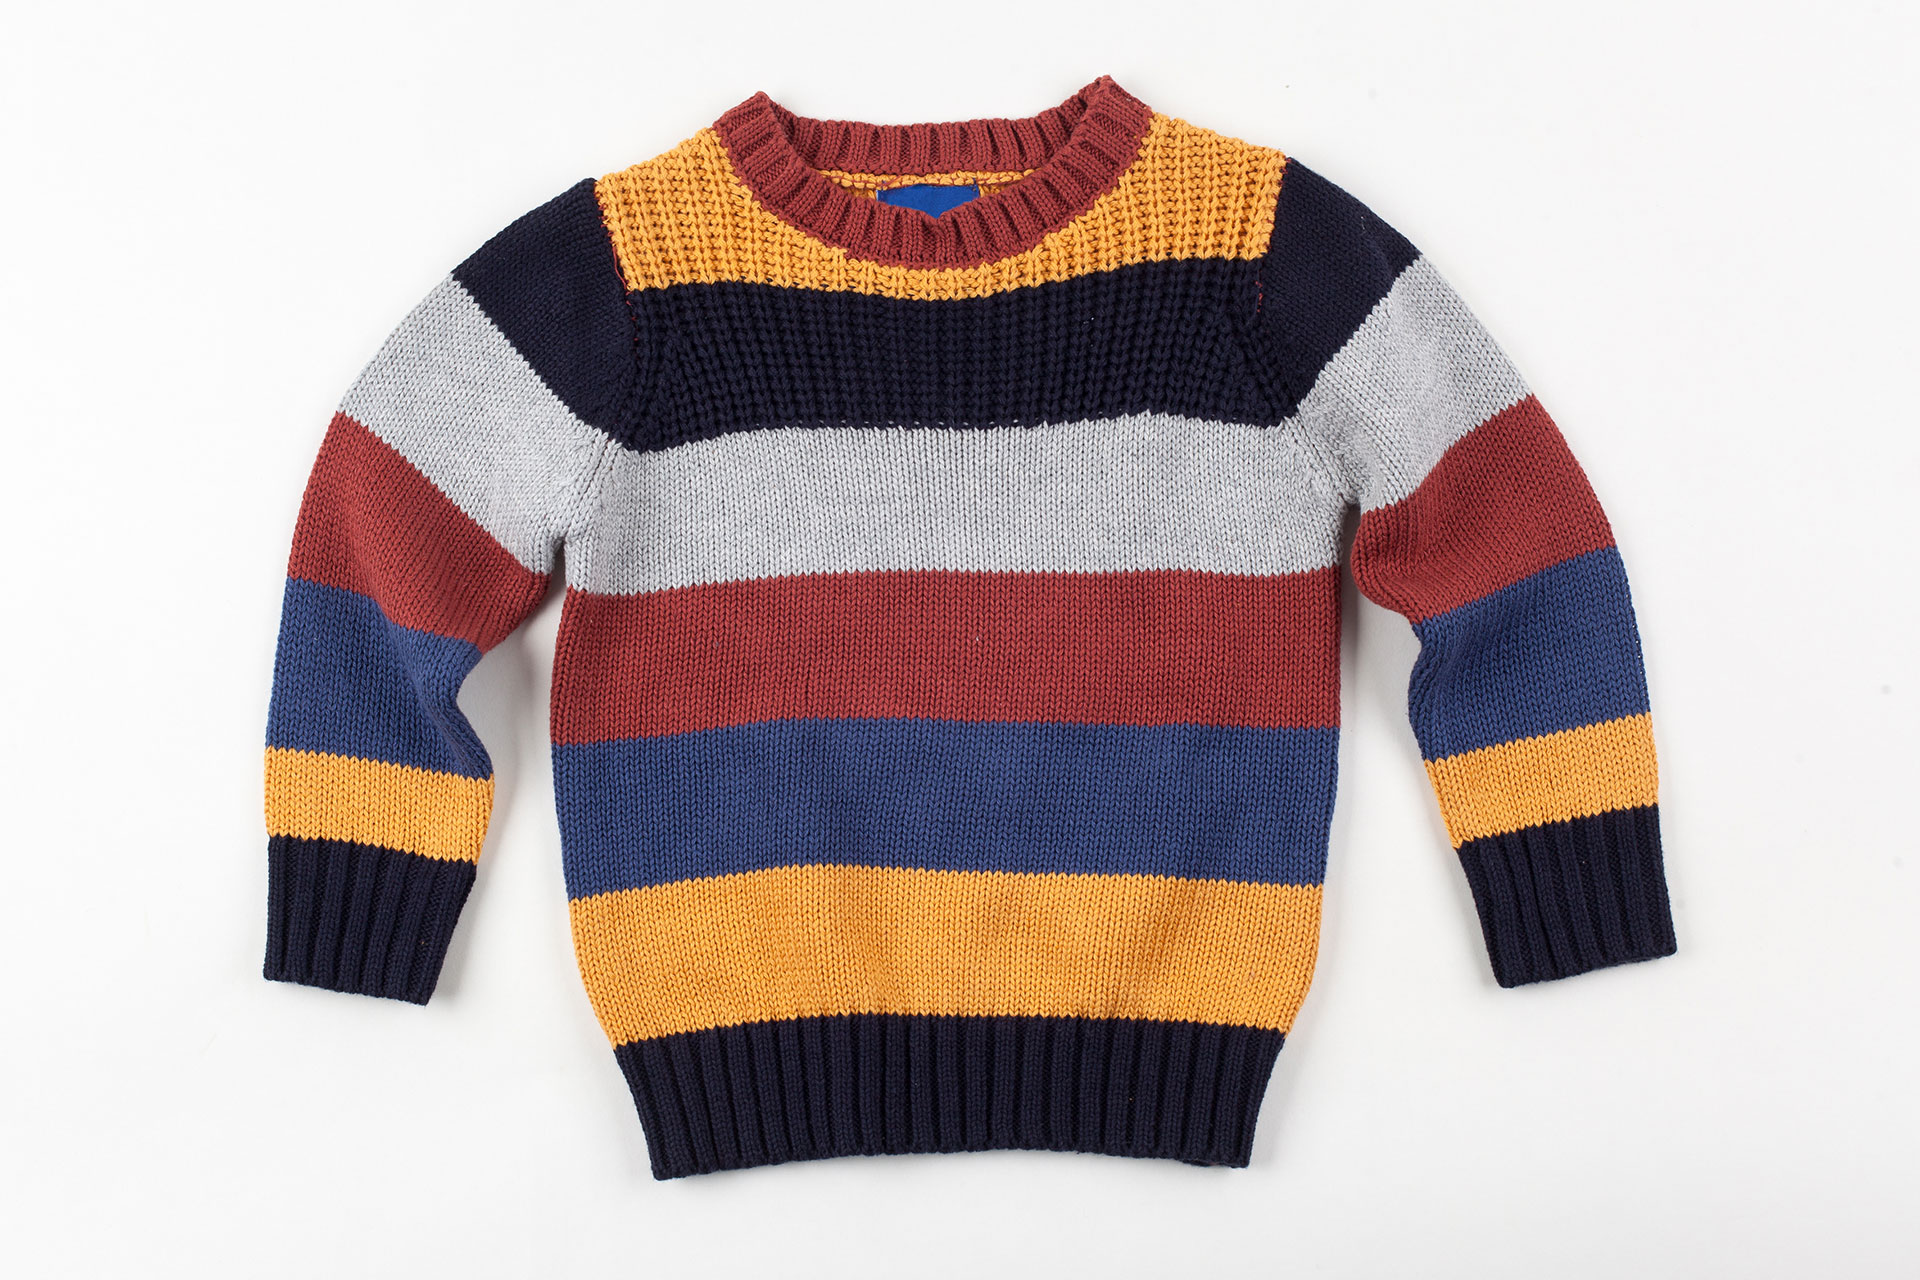 Boy's Striped Sweater; Courtesy of Michael Dechev/Shutterstock.com